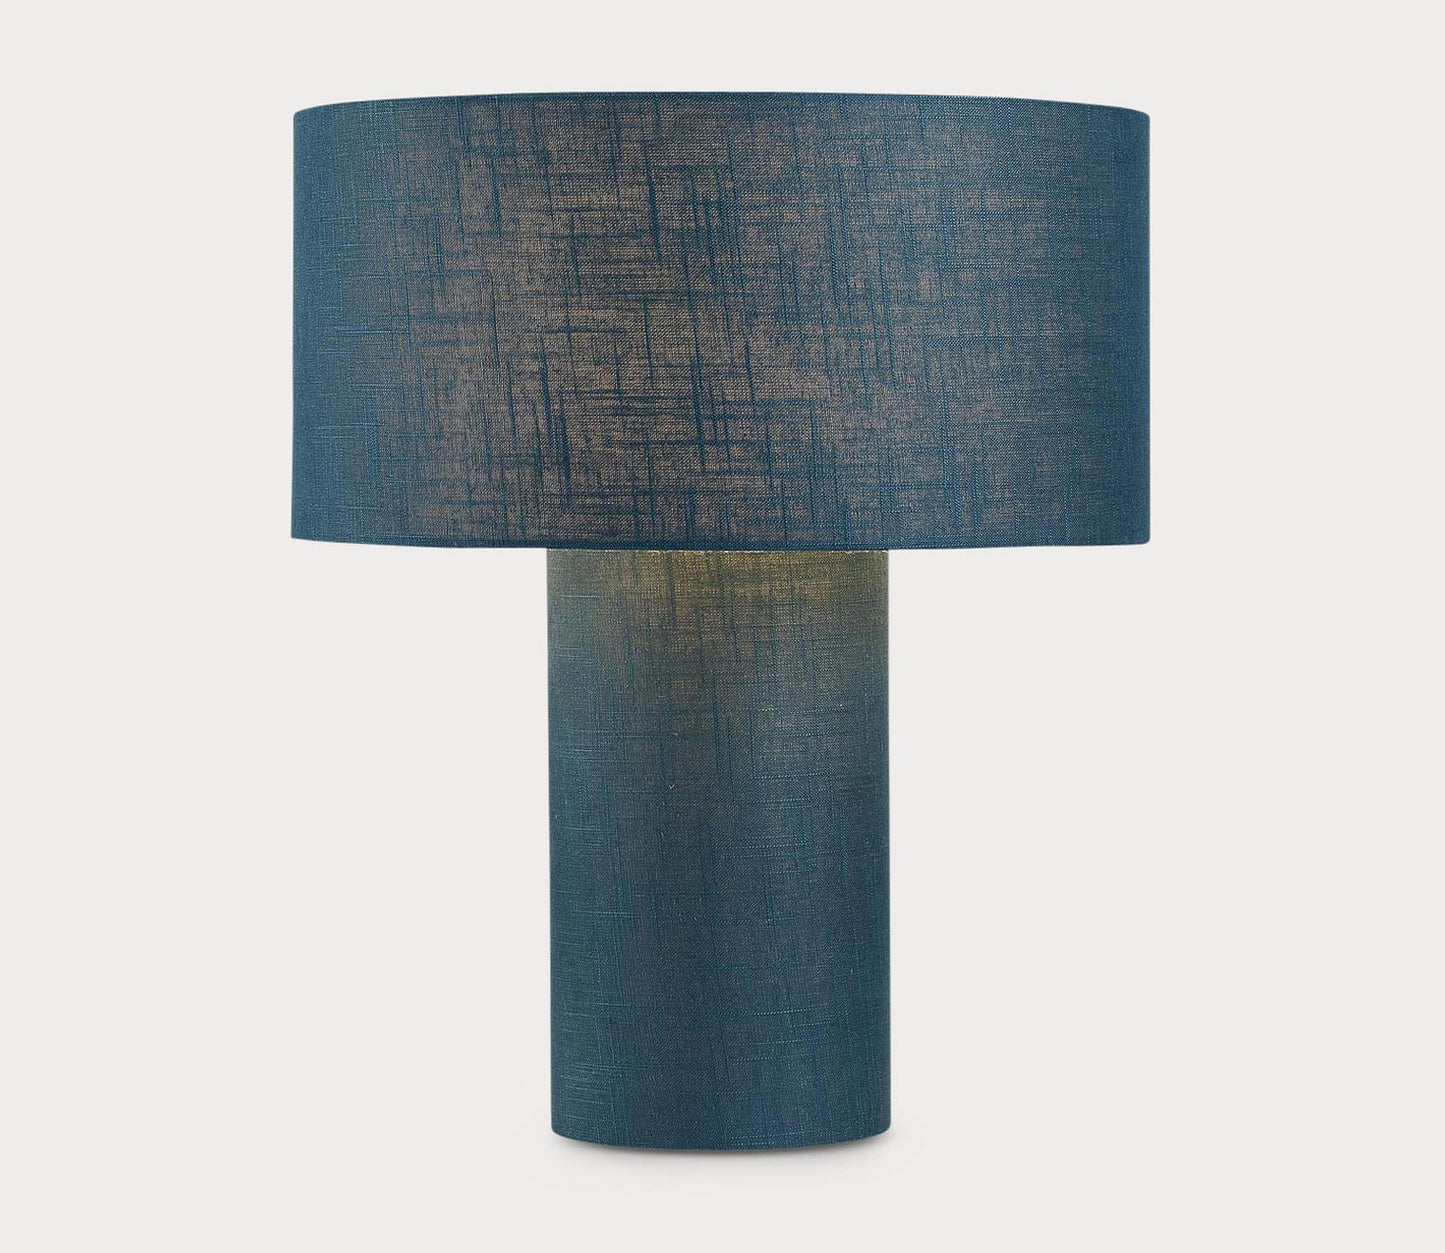 Moonlight Sky Fabric Table Lamp by Nova Lighting